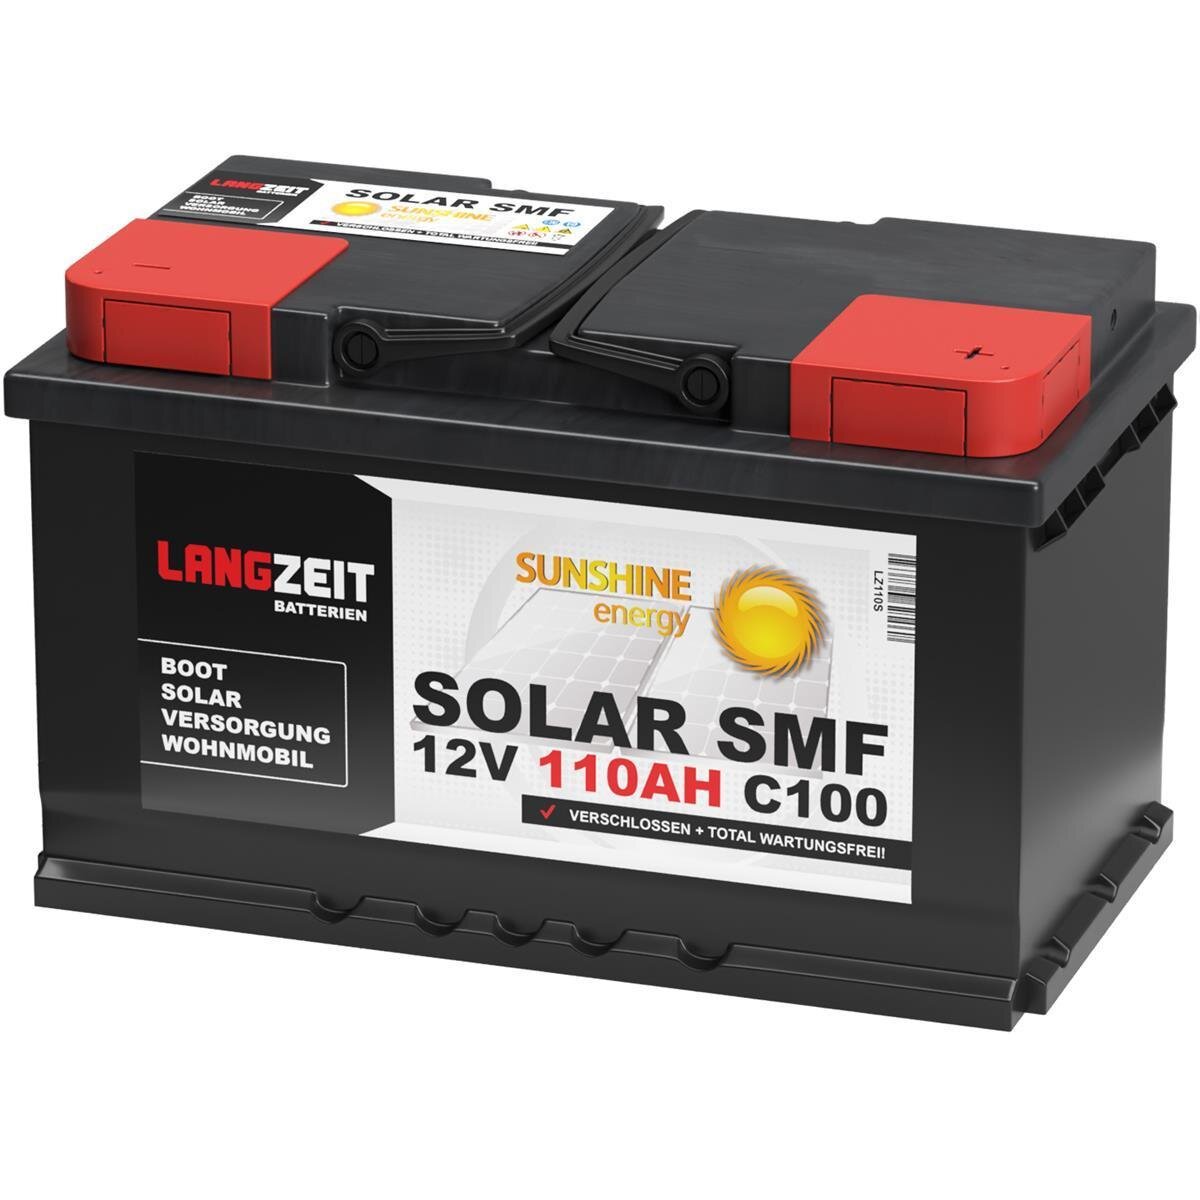 Langzeit Solarbatterie SMF 110Ah 12V, 117,56 €